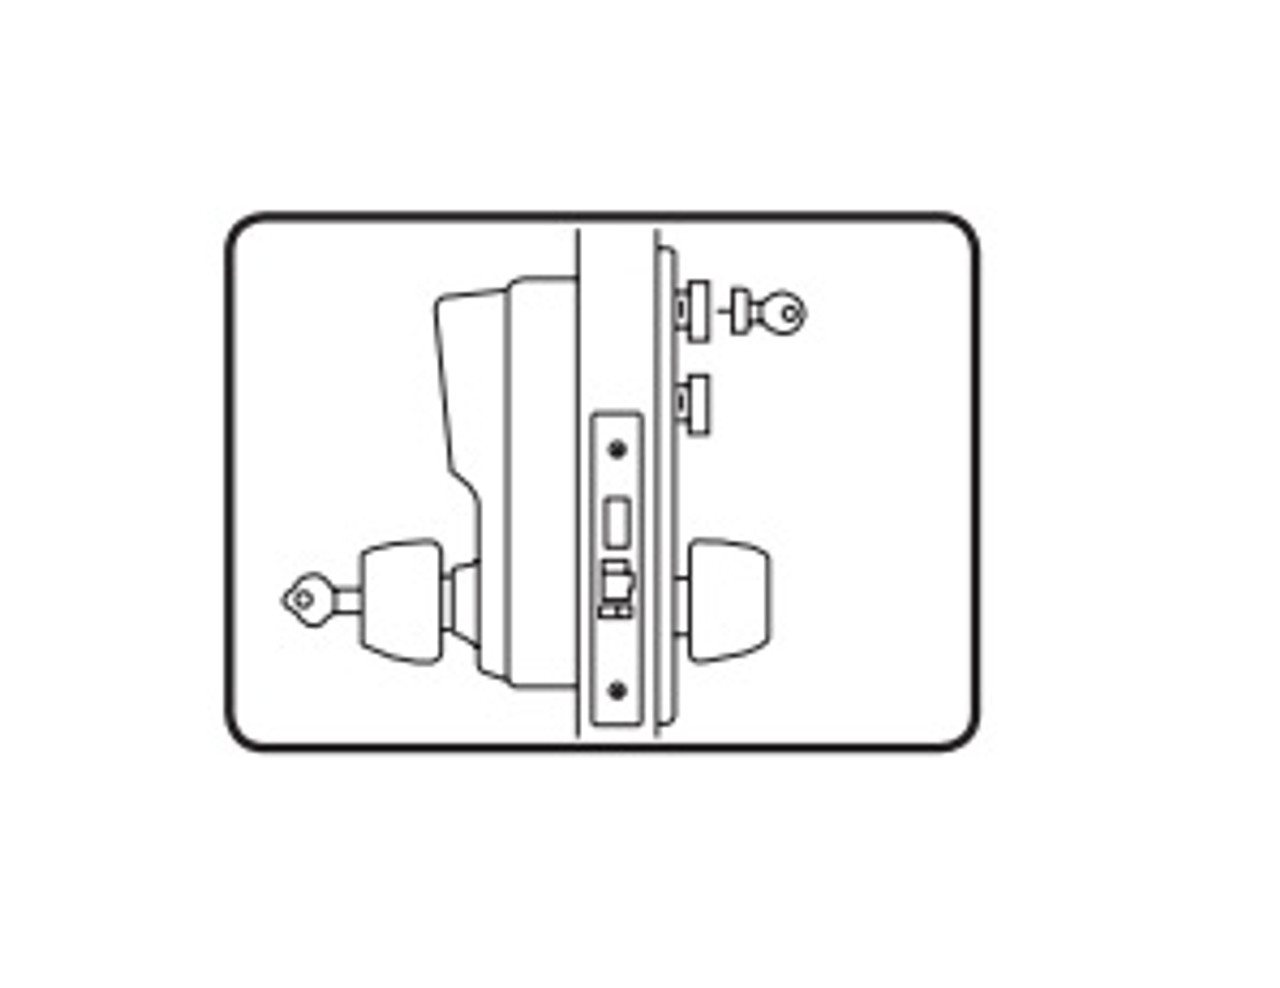 Simplex Pushbutton Mortise Lock w/ Lever Combination Entry-LFIC Schlage-Passage-Lockout-Deadbolt Bright Brass LH